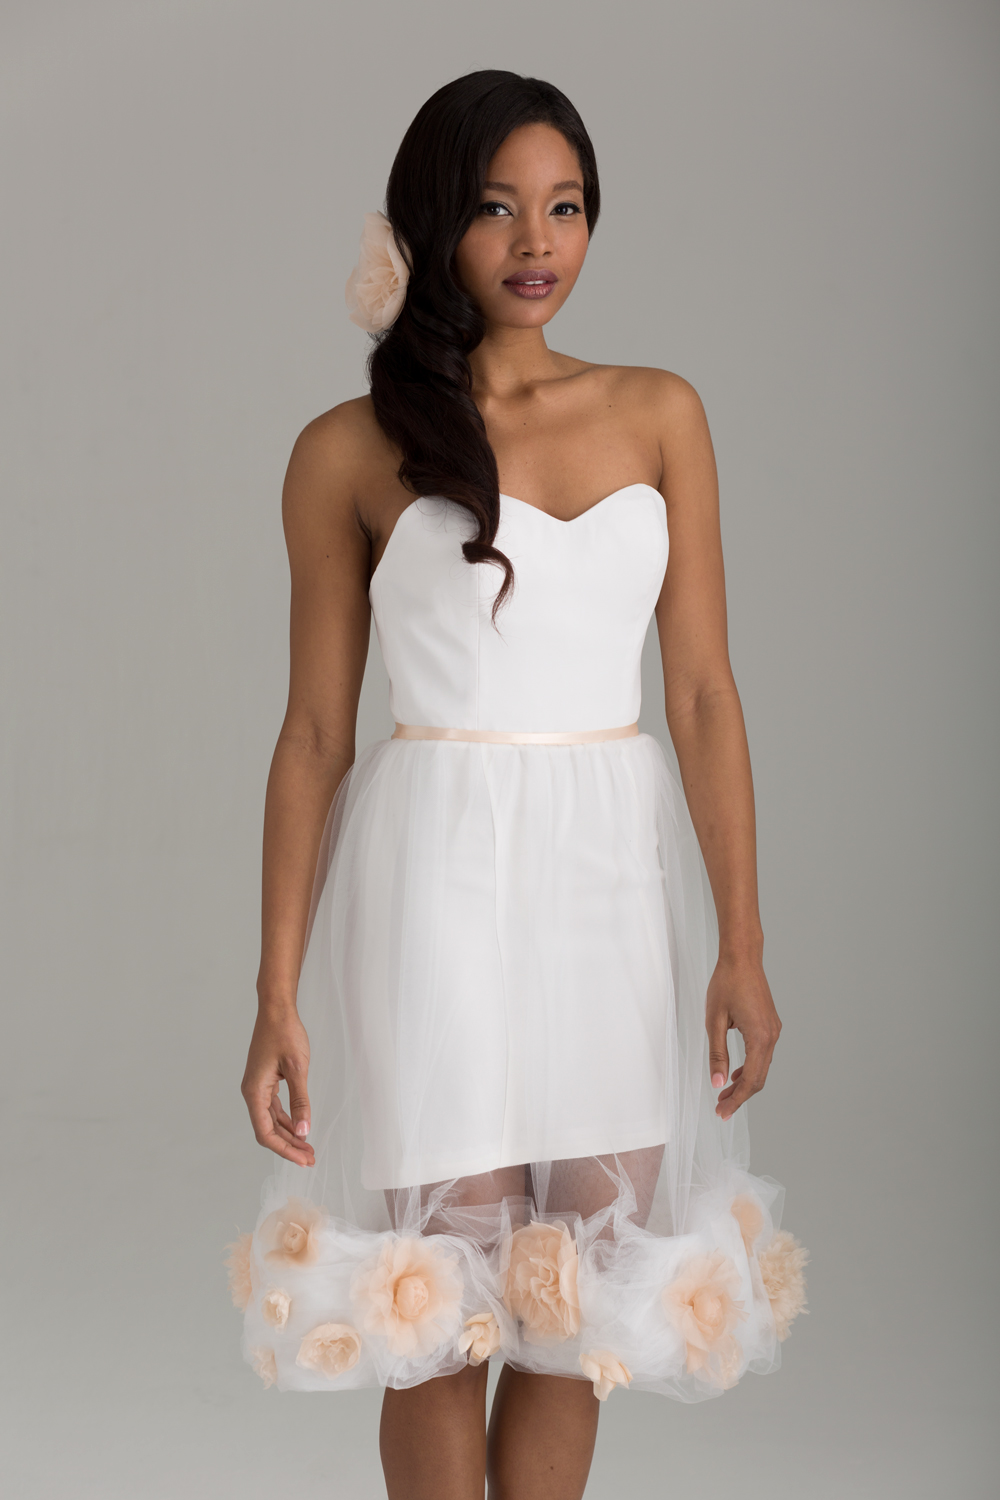 NKB17-85001 "Sofia" Corseted Mini-Dress & NKB17-83003 "Peach Camellia" Short Tulle Skirt with Satin Ribbon Waist-Tie